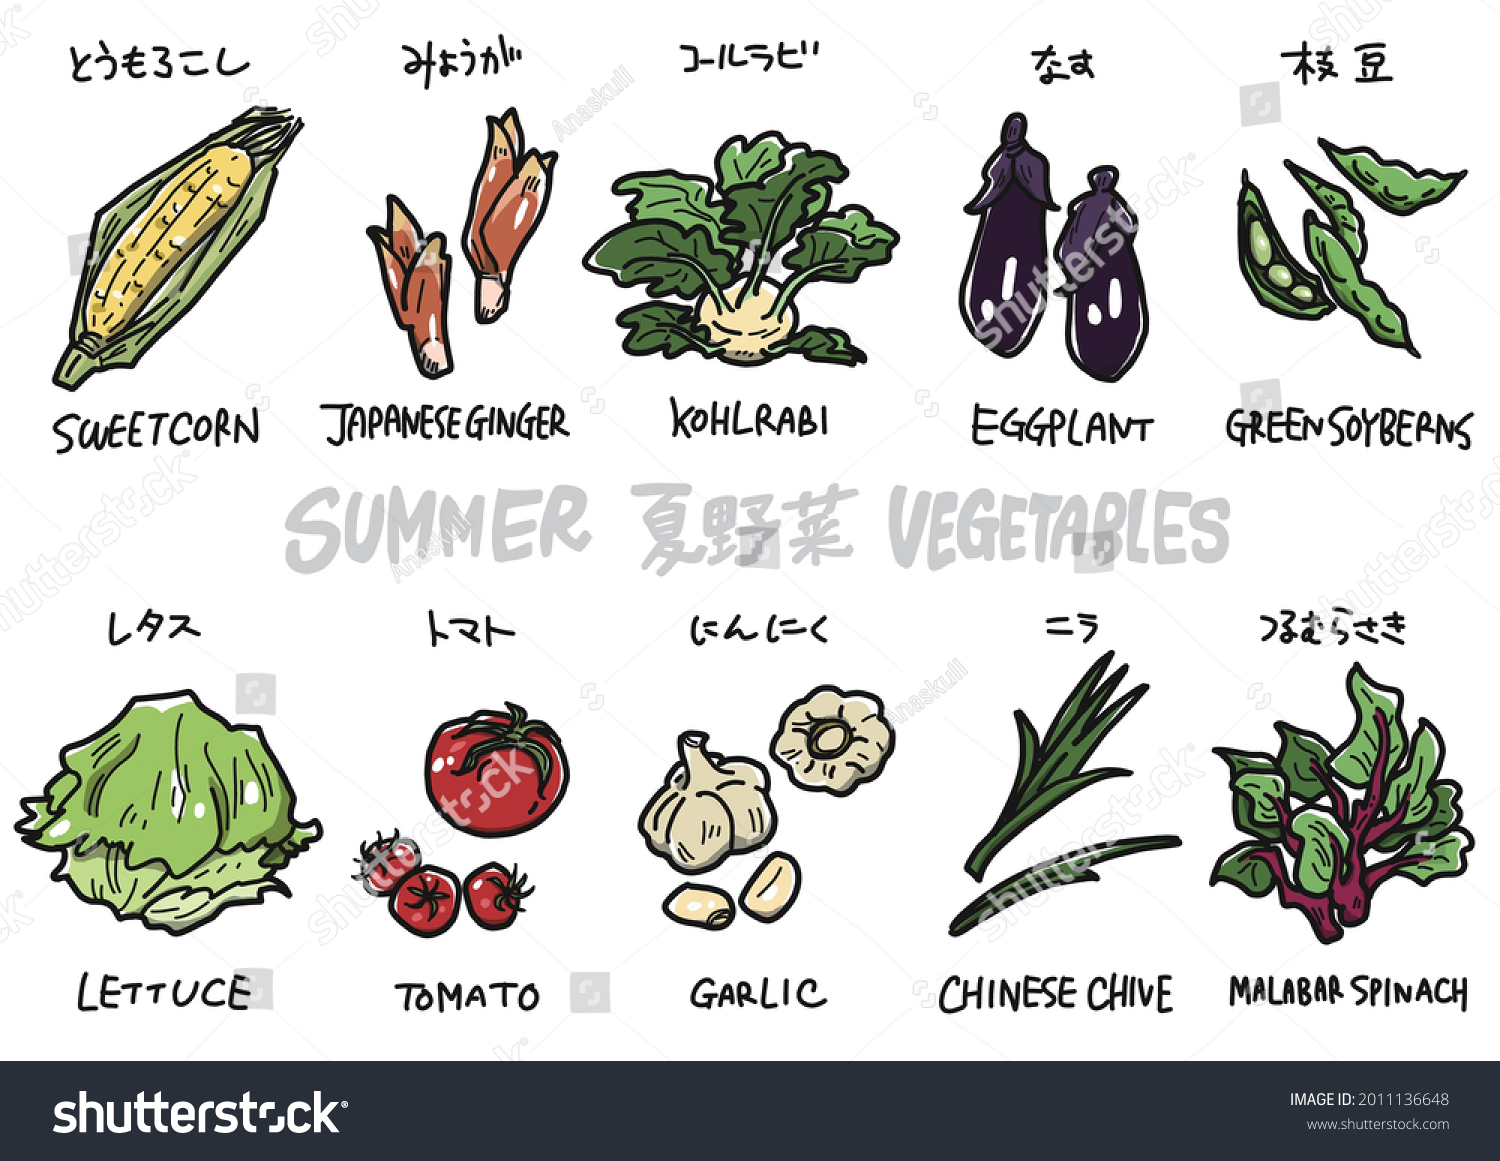 Illustration of corn, japanese ginger, kohlrabi, eggplant, green soyberns, lettuce, tomato, garlic, chinese chive, malabar spinach #2011136648